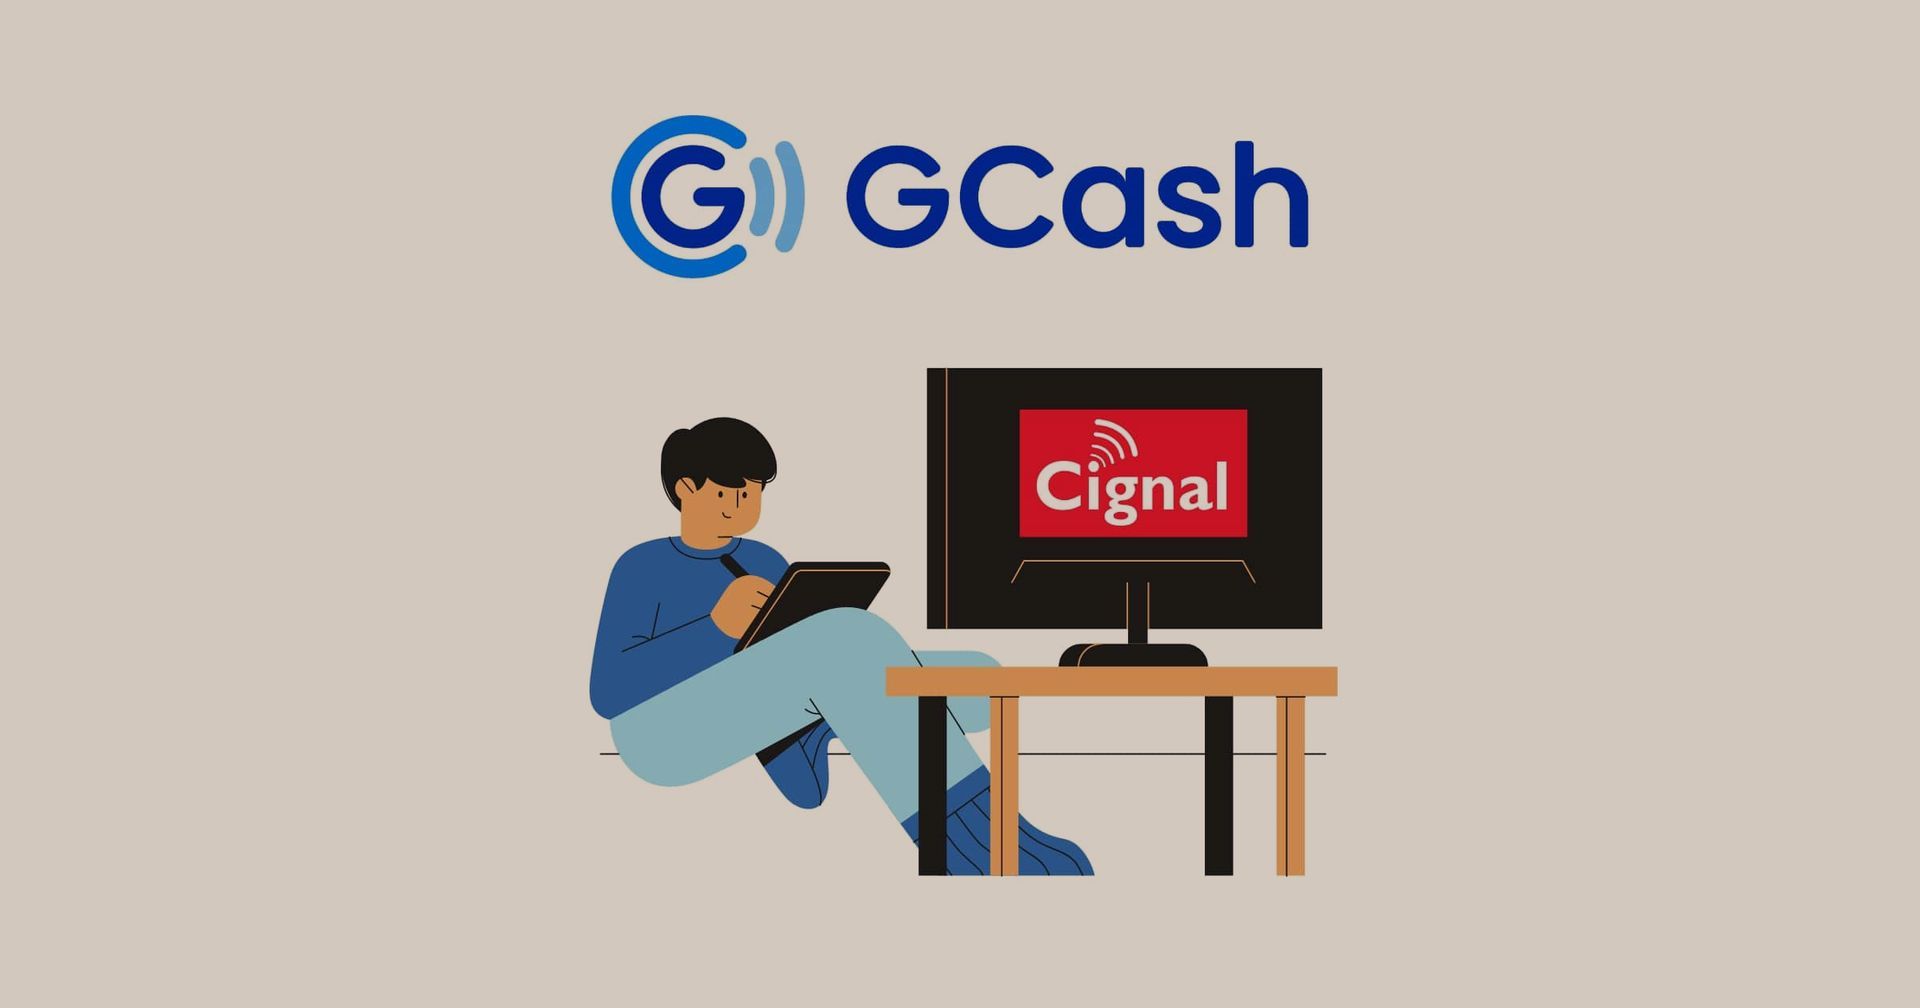 How to load Cignal using GCash